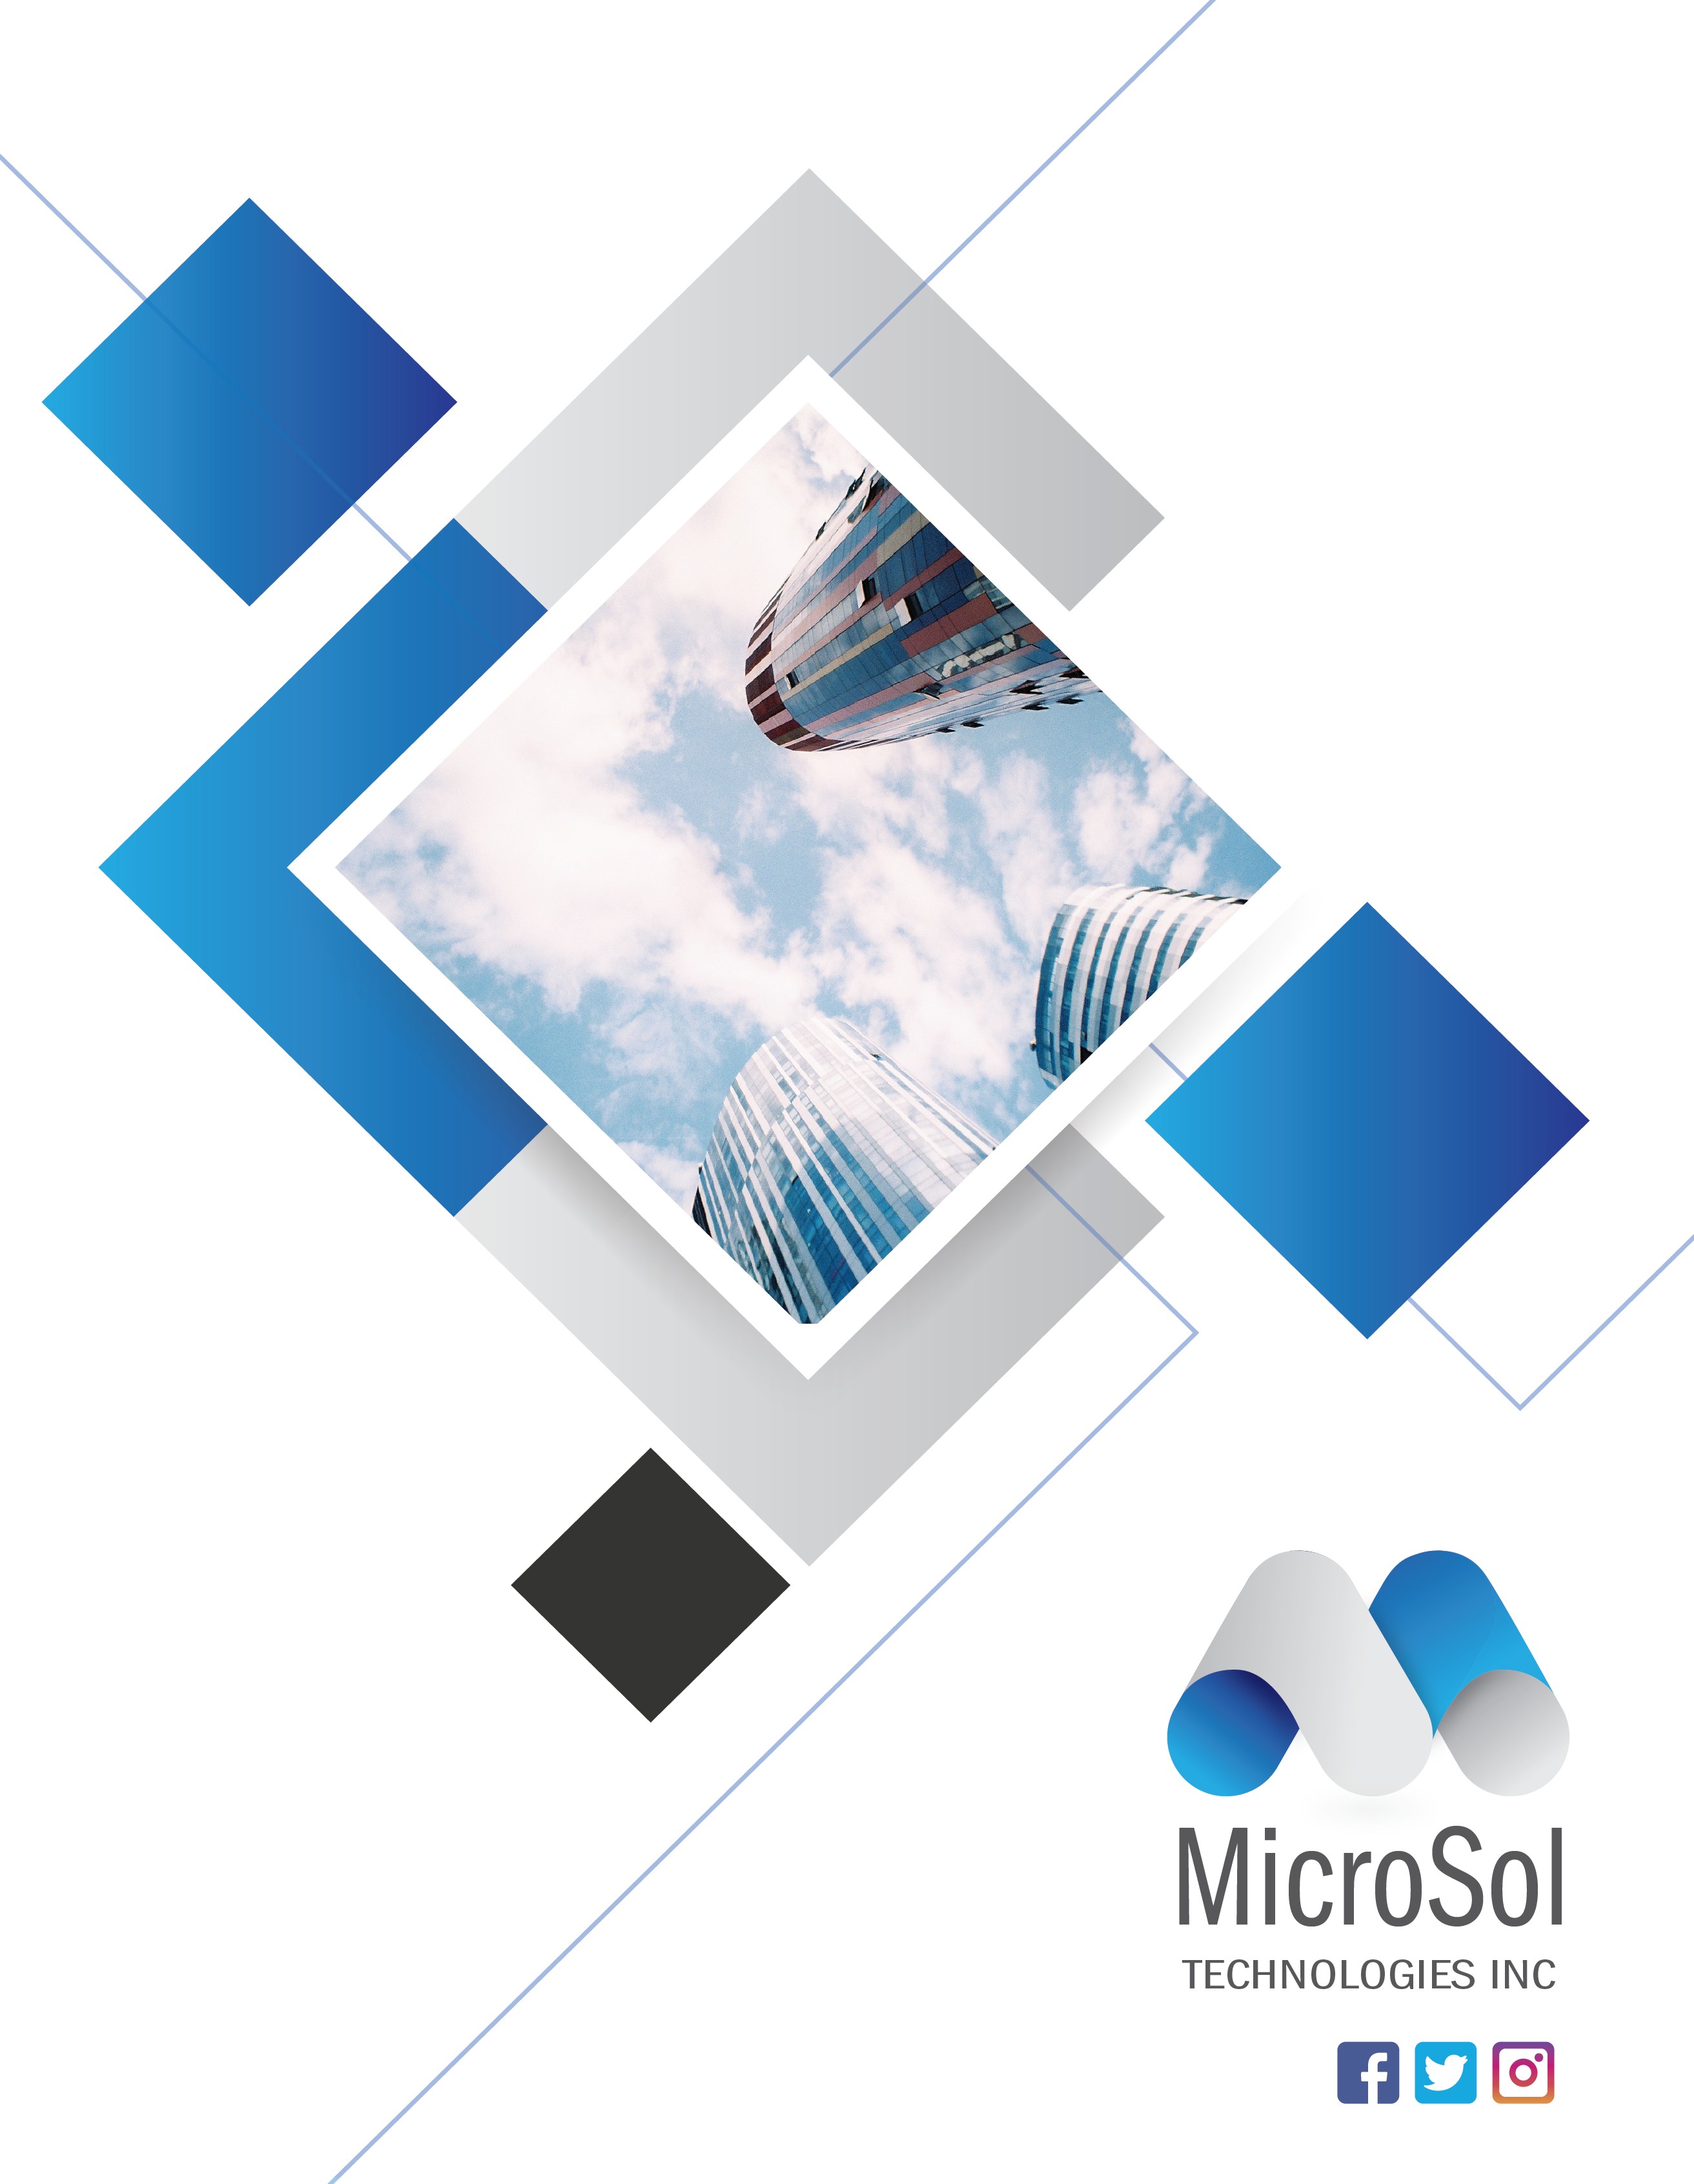 MicroSol Technologies Inc.